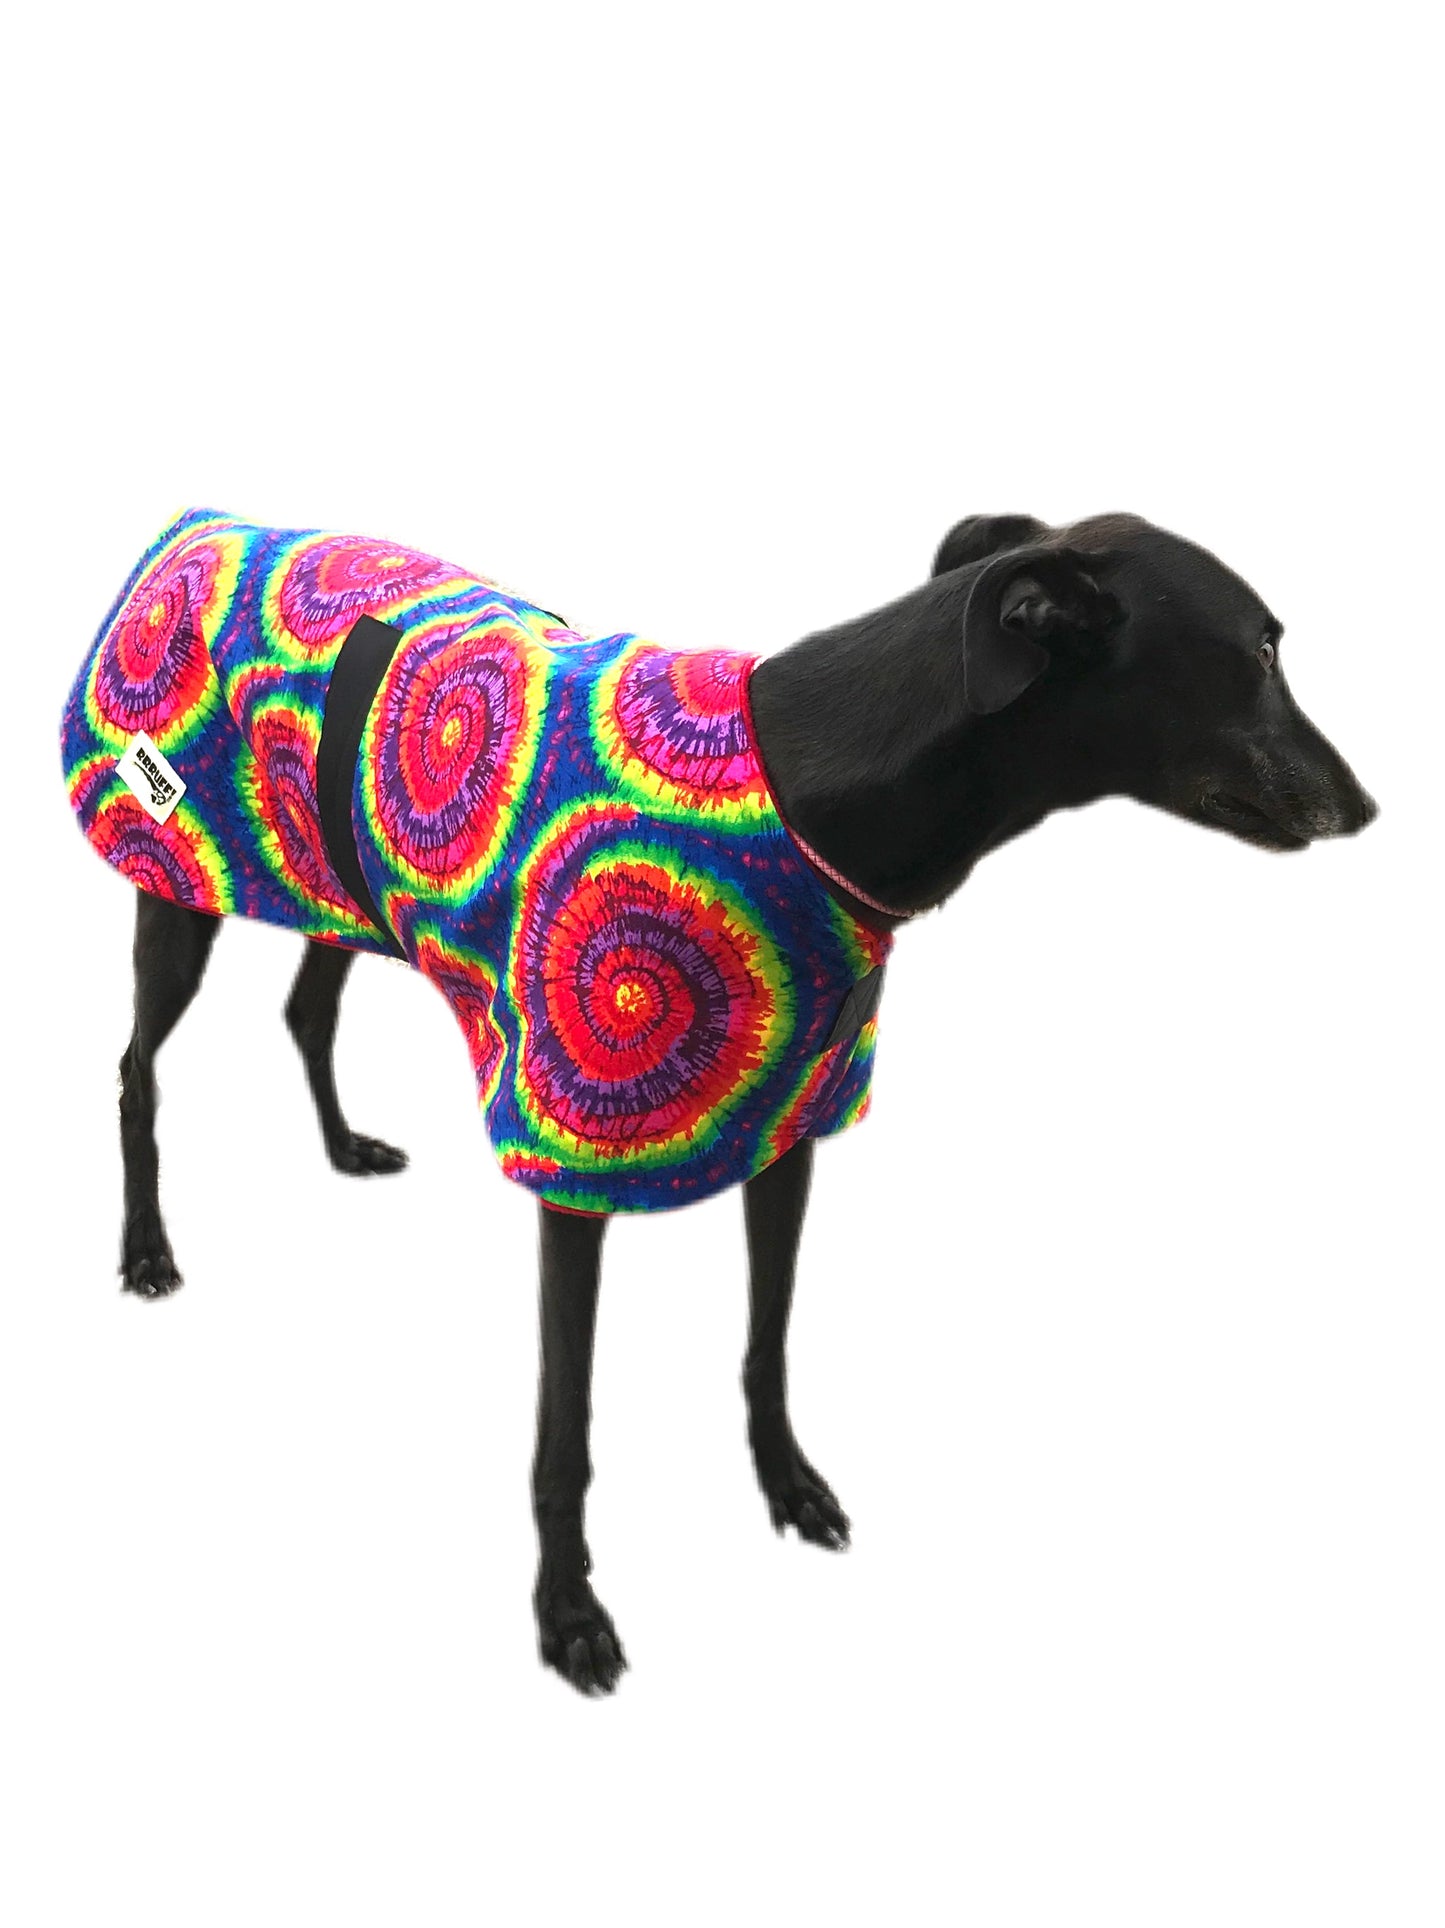 Autumn range classic style Greyhound ‘retro’ coat in cotton & thick fleece washable